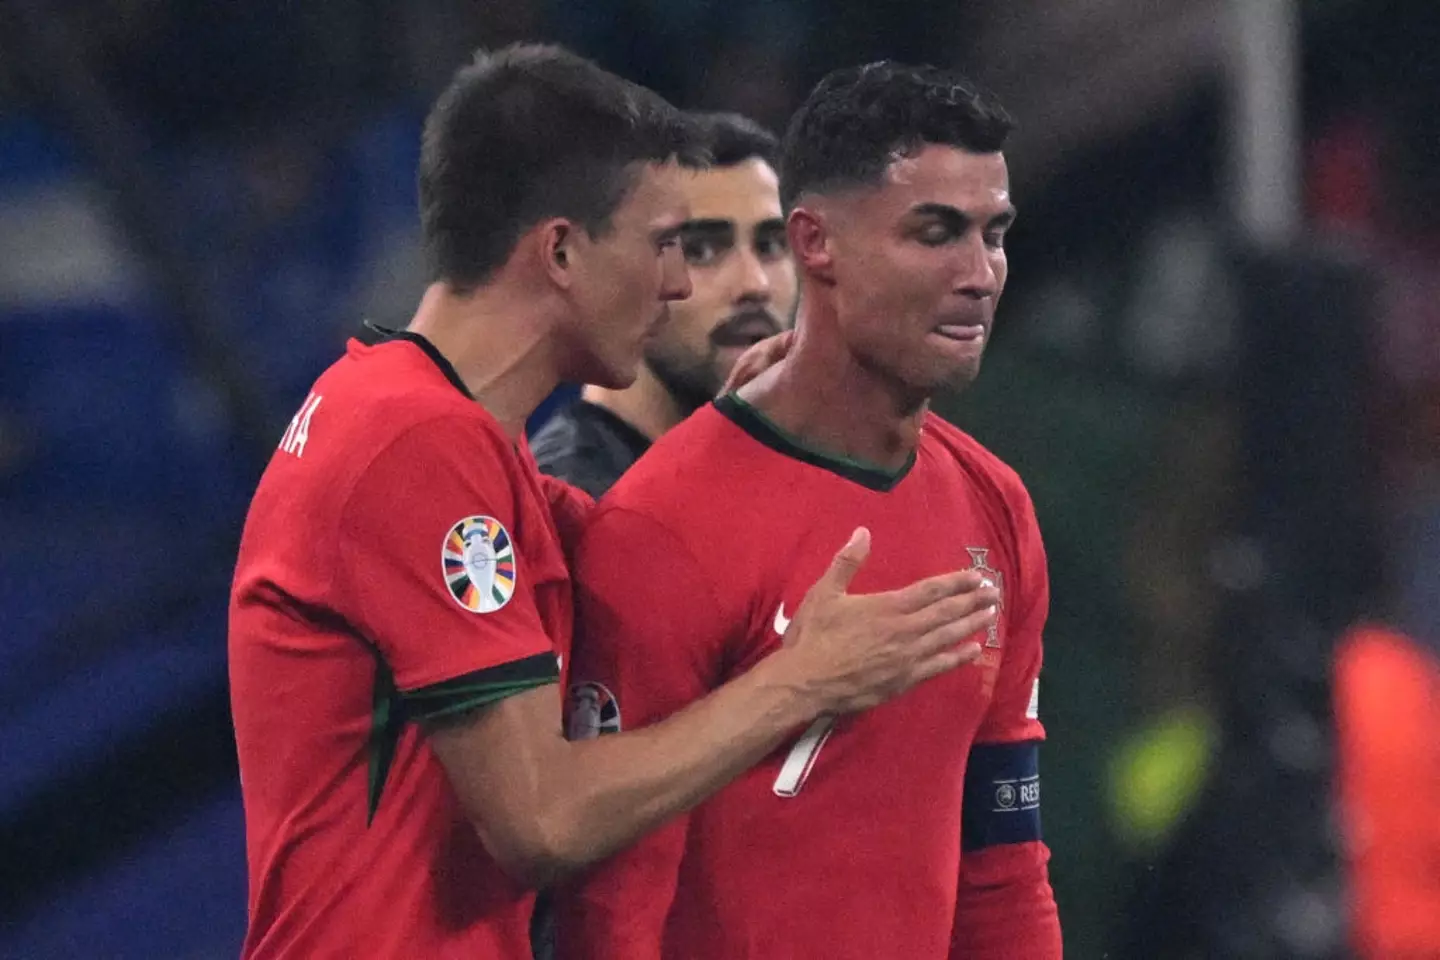 Ronaldo broke down in tears after missing a penalty (Image: Getty)